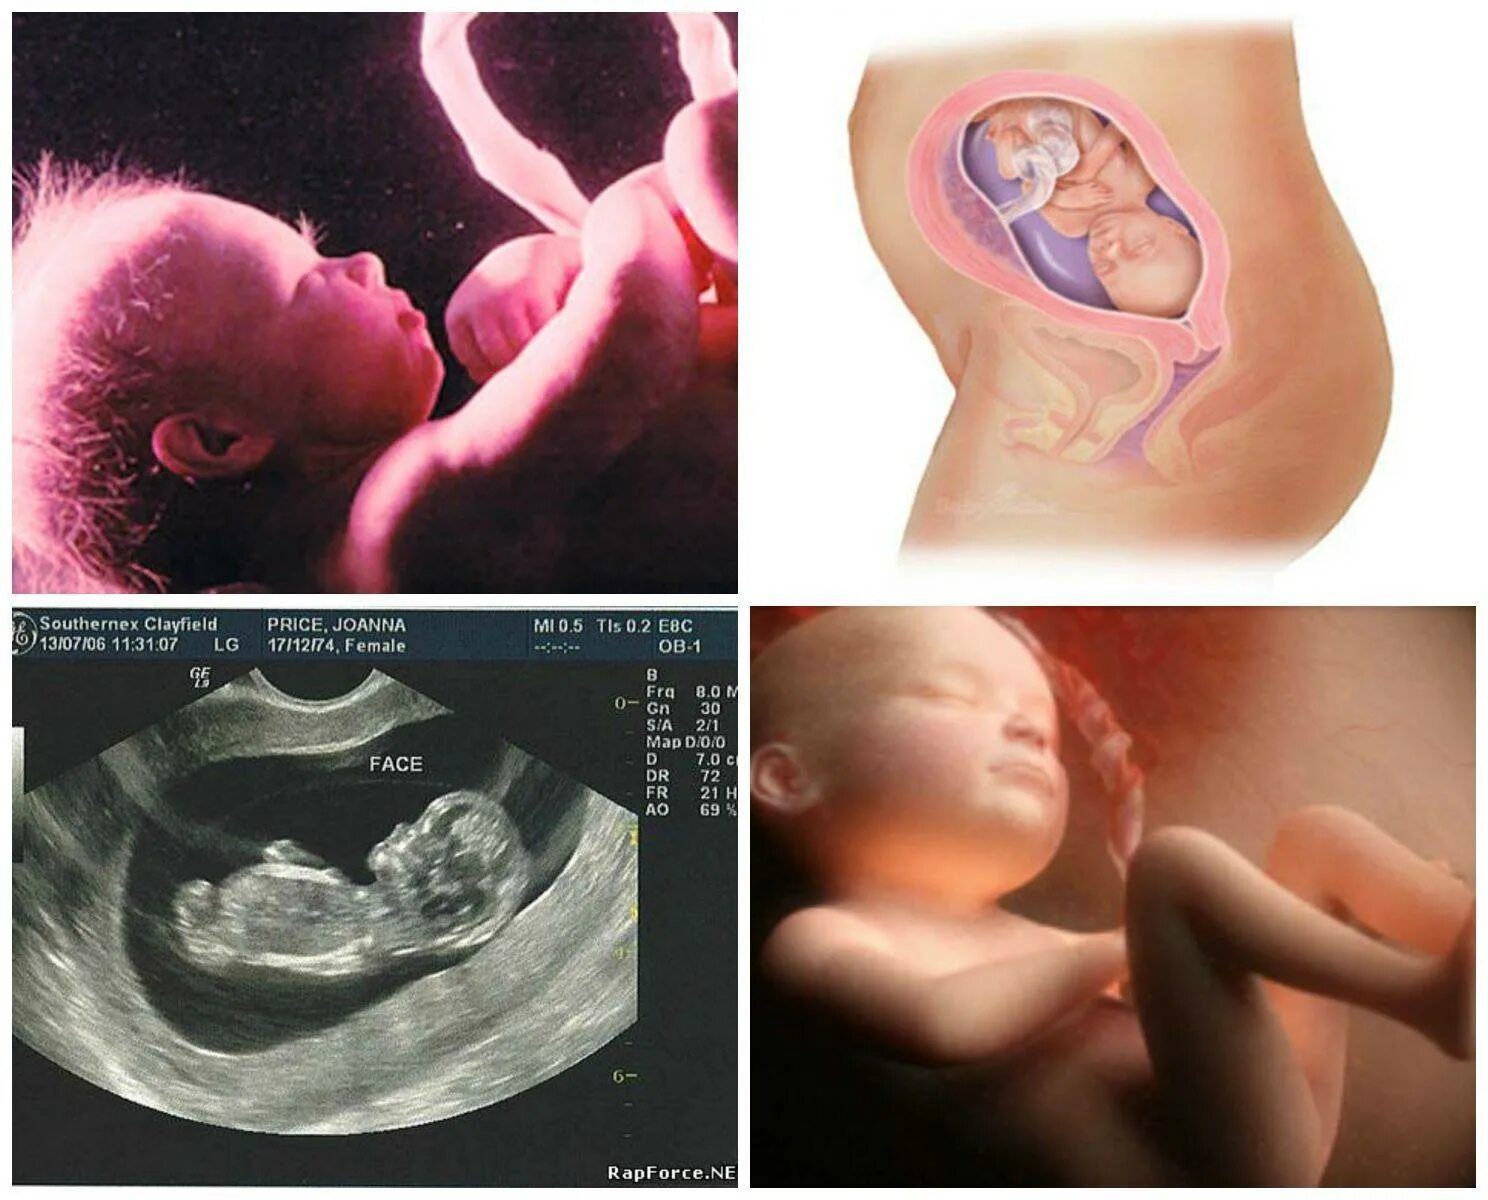 27 Неделя беременности фото плода. Ребенок на 26 неделе беременности УЗИ. 26 Неделя беременности фото плода. Беременность 26-27 недель фото плода. Шевеления на 25 неделе